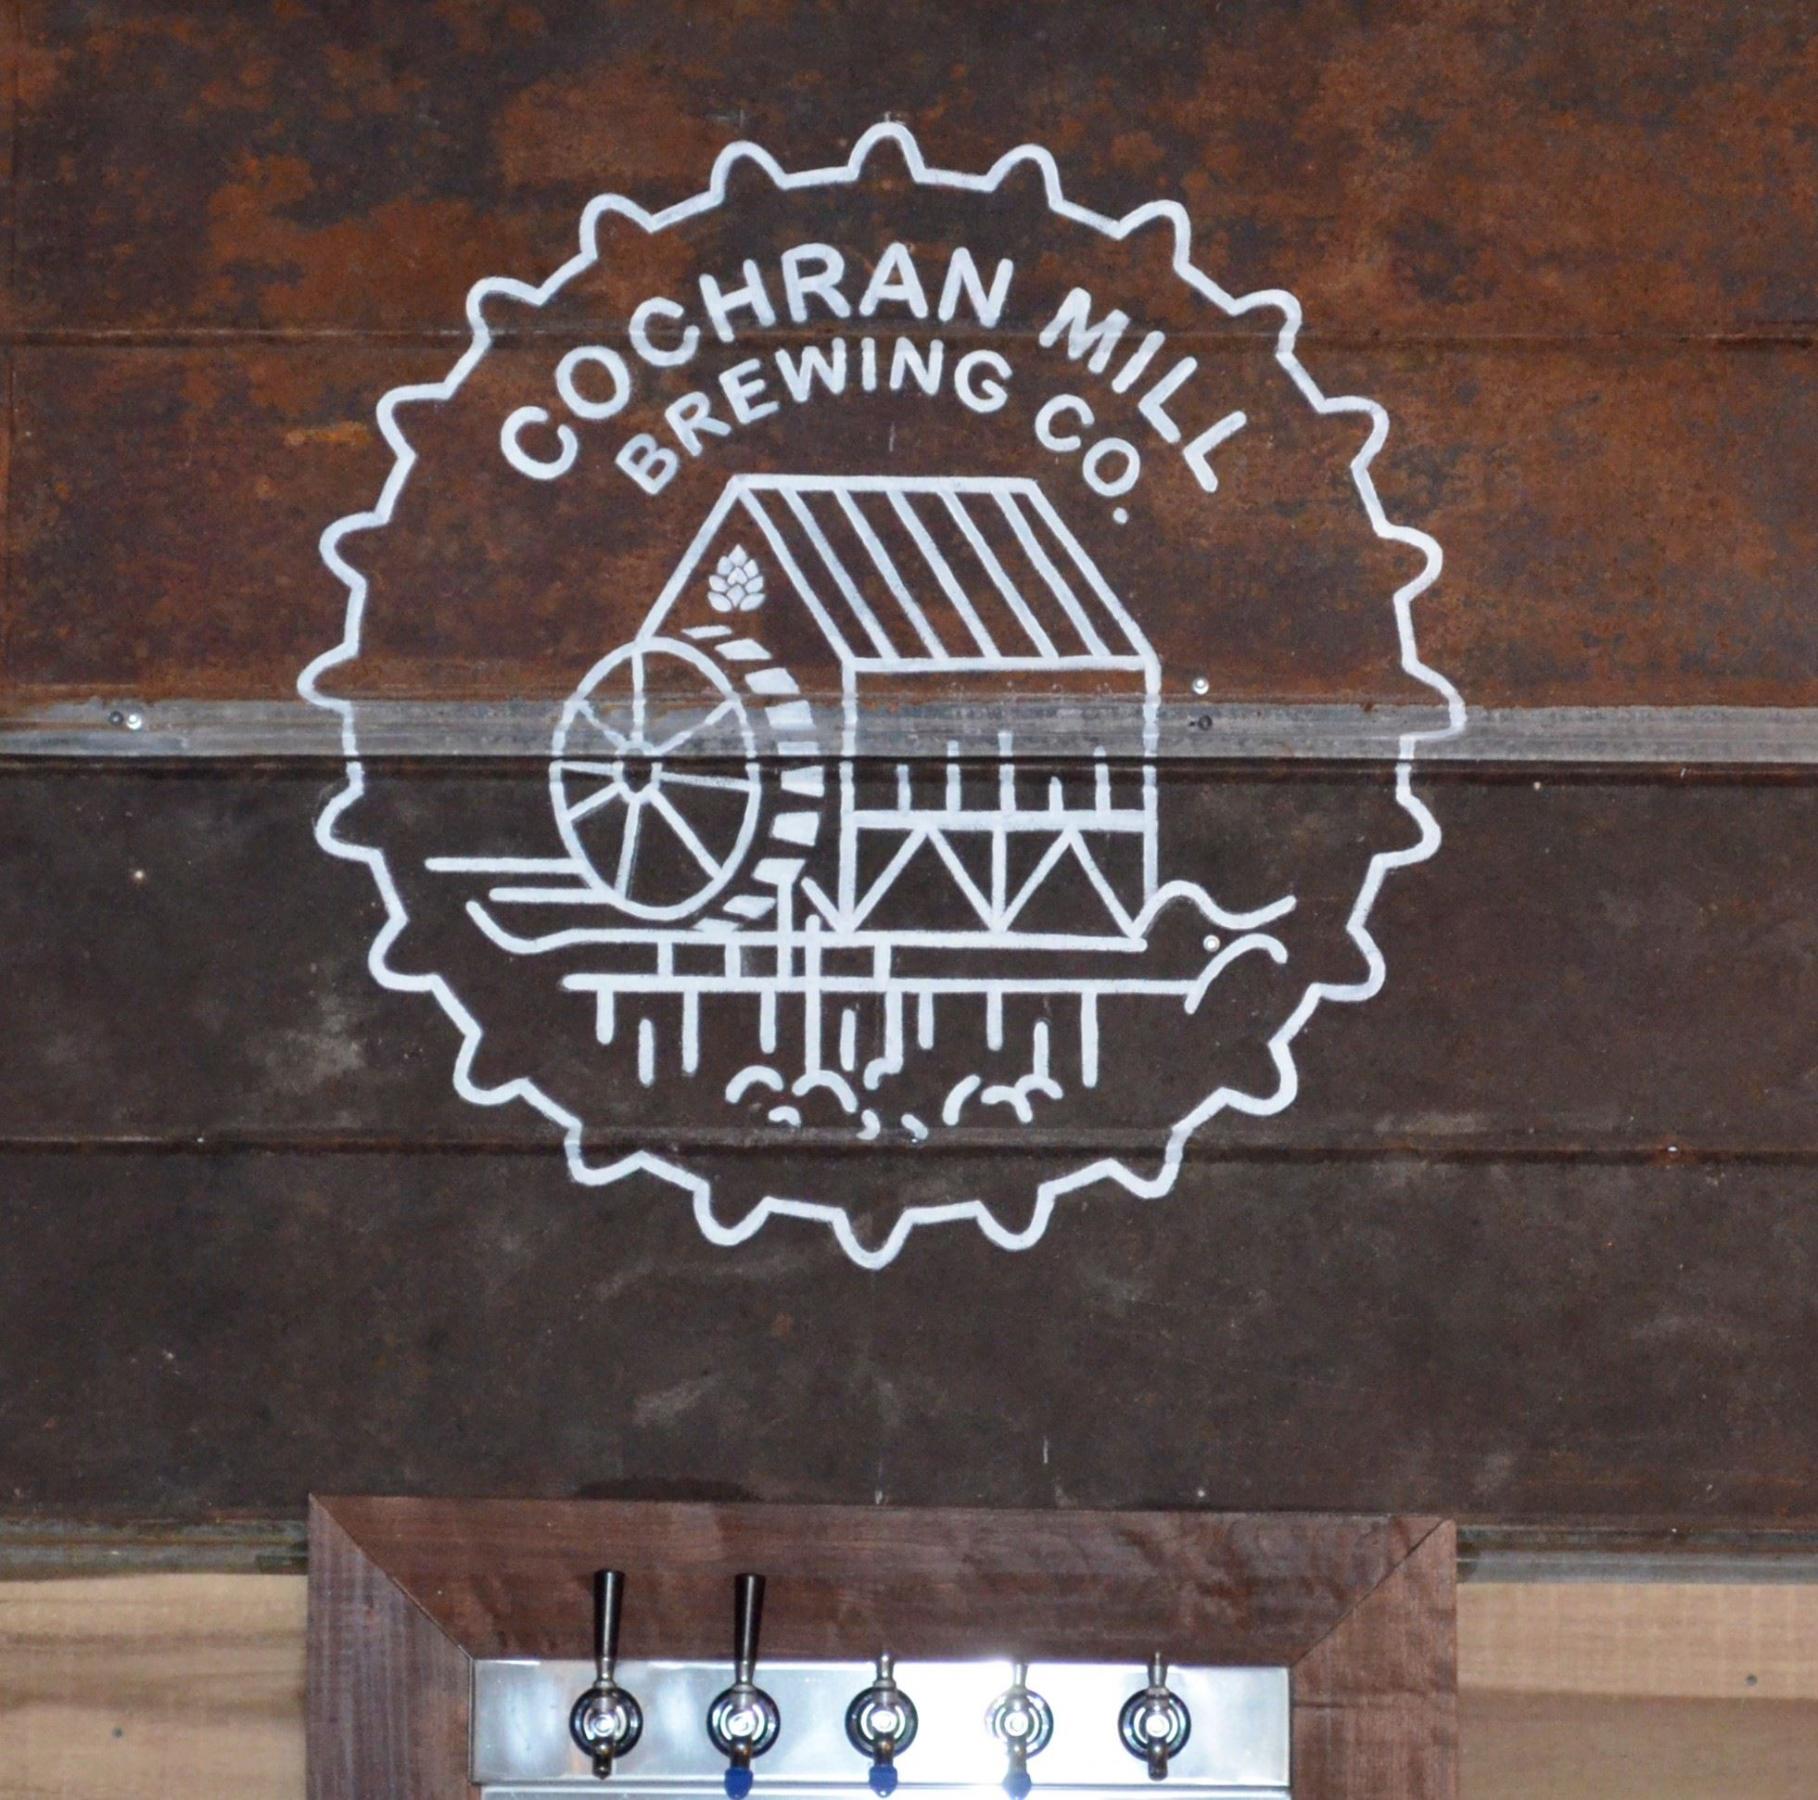 Cochran Mill Brewing Company